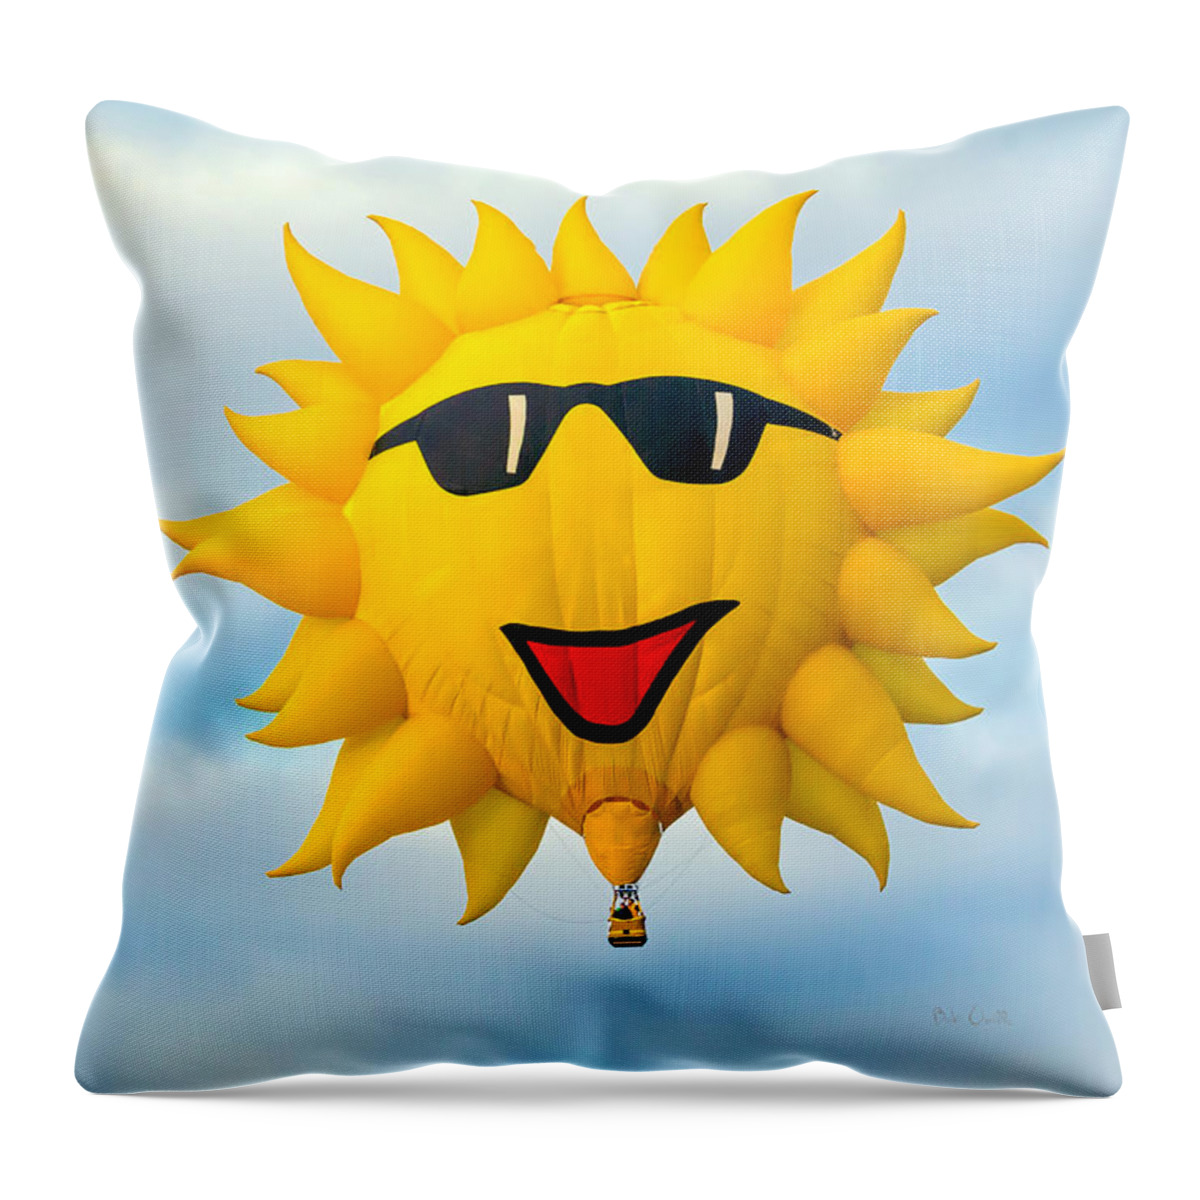 Sunny Throw Pillow featuring the photograph Sunny Sunrise Hot Air Balloon by Bob Orsillo